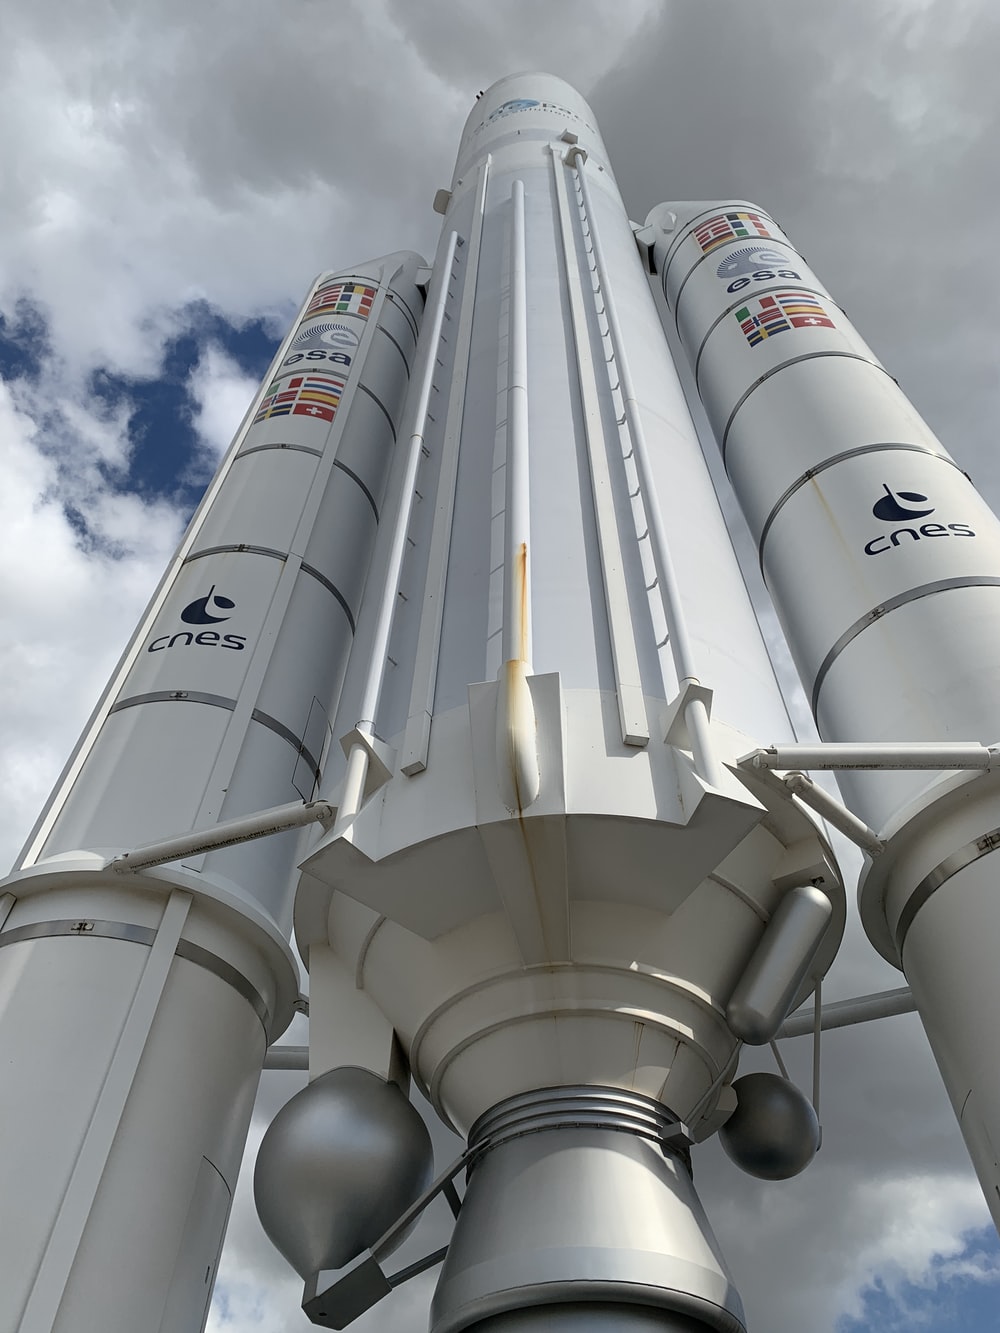 Rocket Ship Picture. Download Free Image